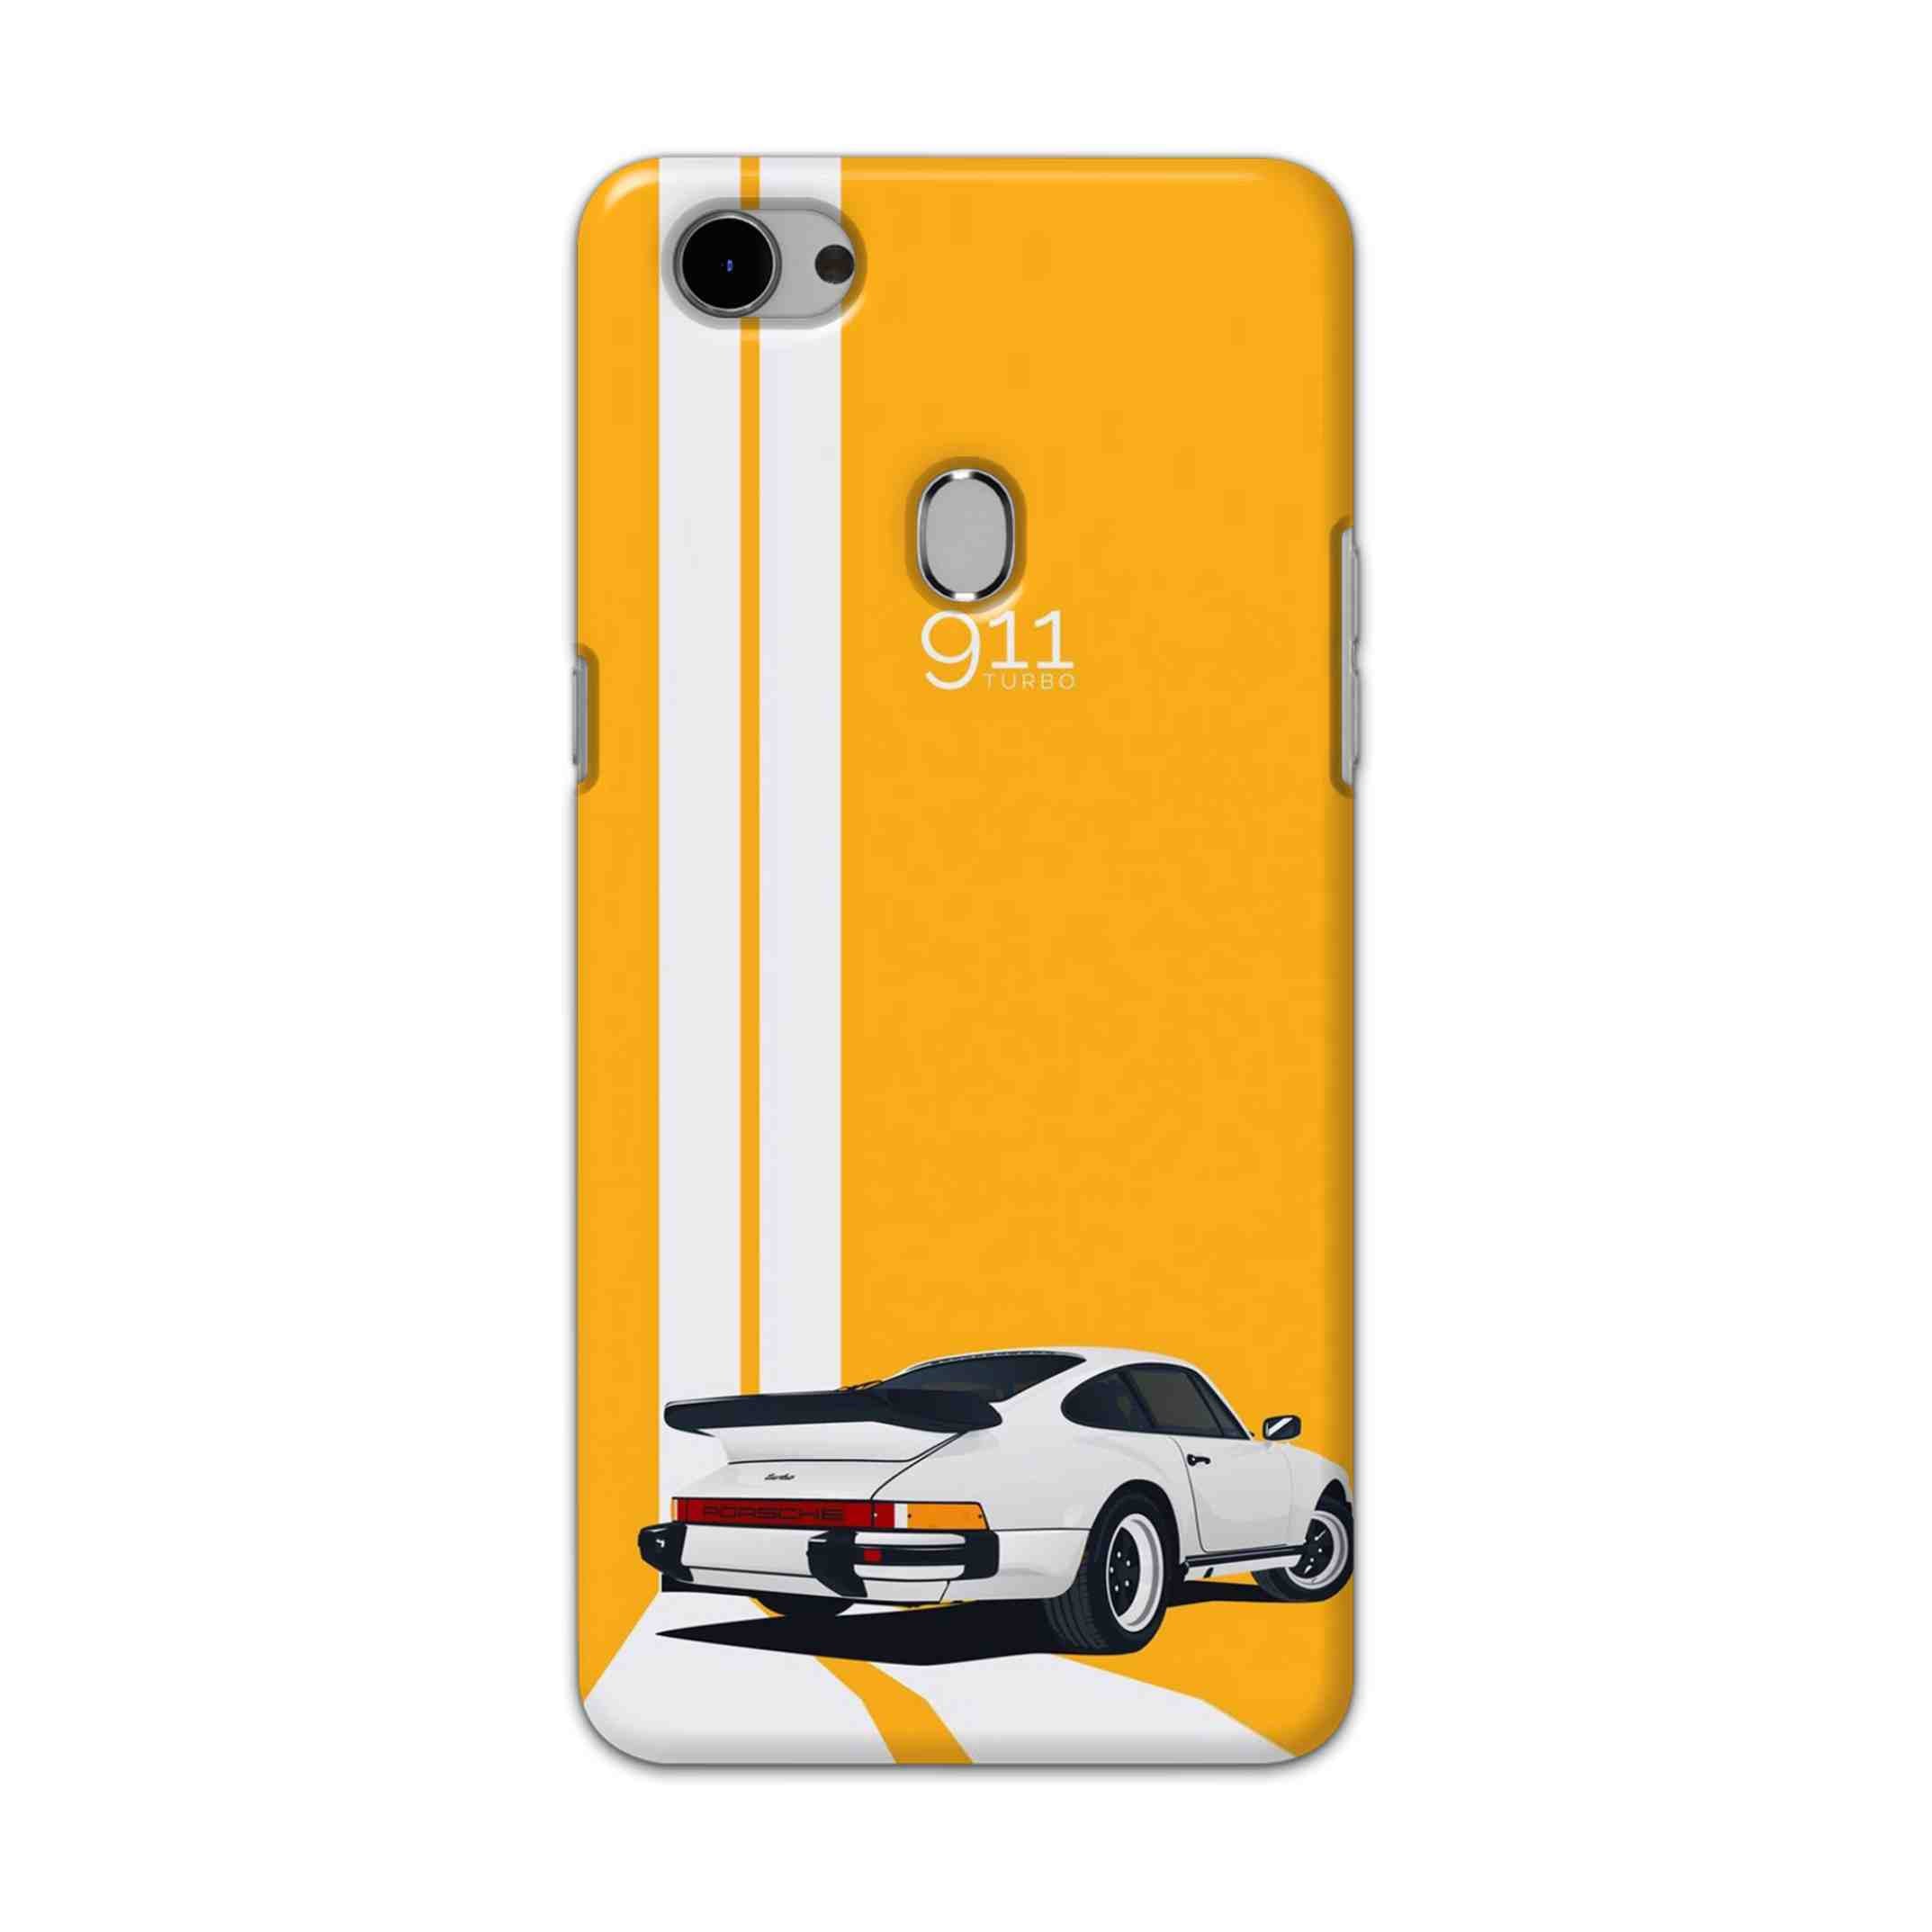 Buy 911 Gt Porche Hard Back Mobile Phone Case Cover For Oppo F7 Online